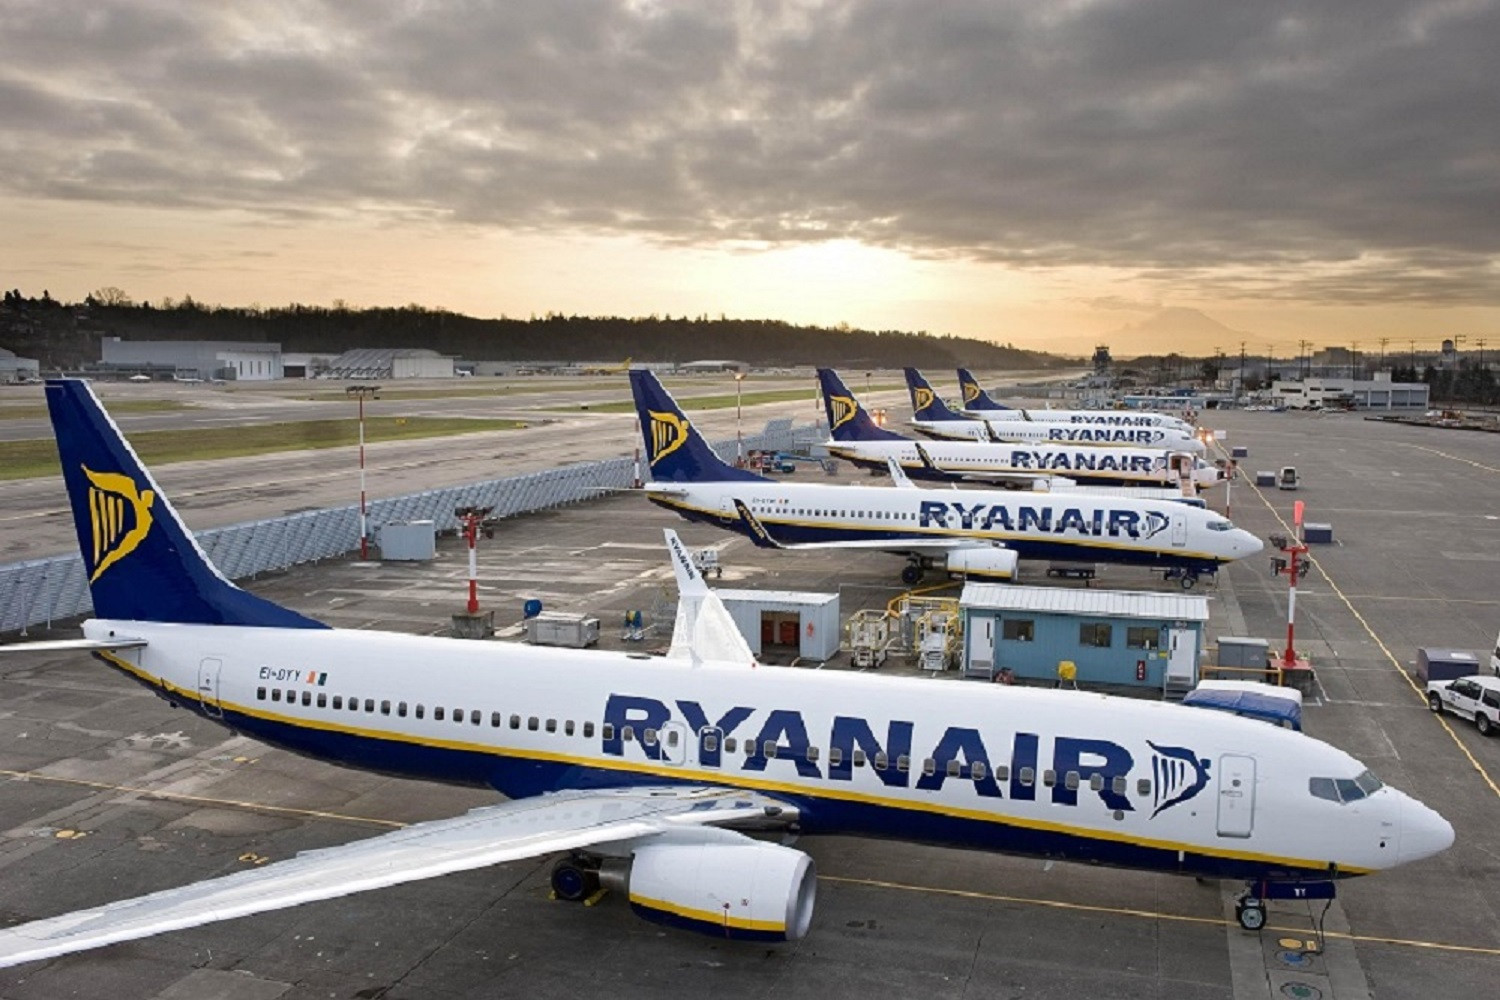 H βρετανική Υπηρεσία Πολιτικής αεροπορίας θα κινηθεί νομικά εναντίον της Ryanair